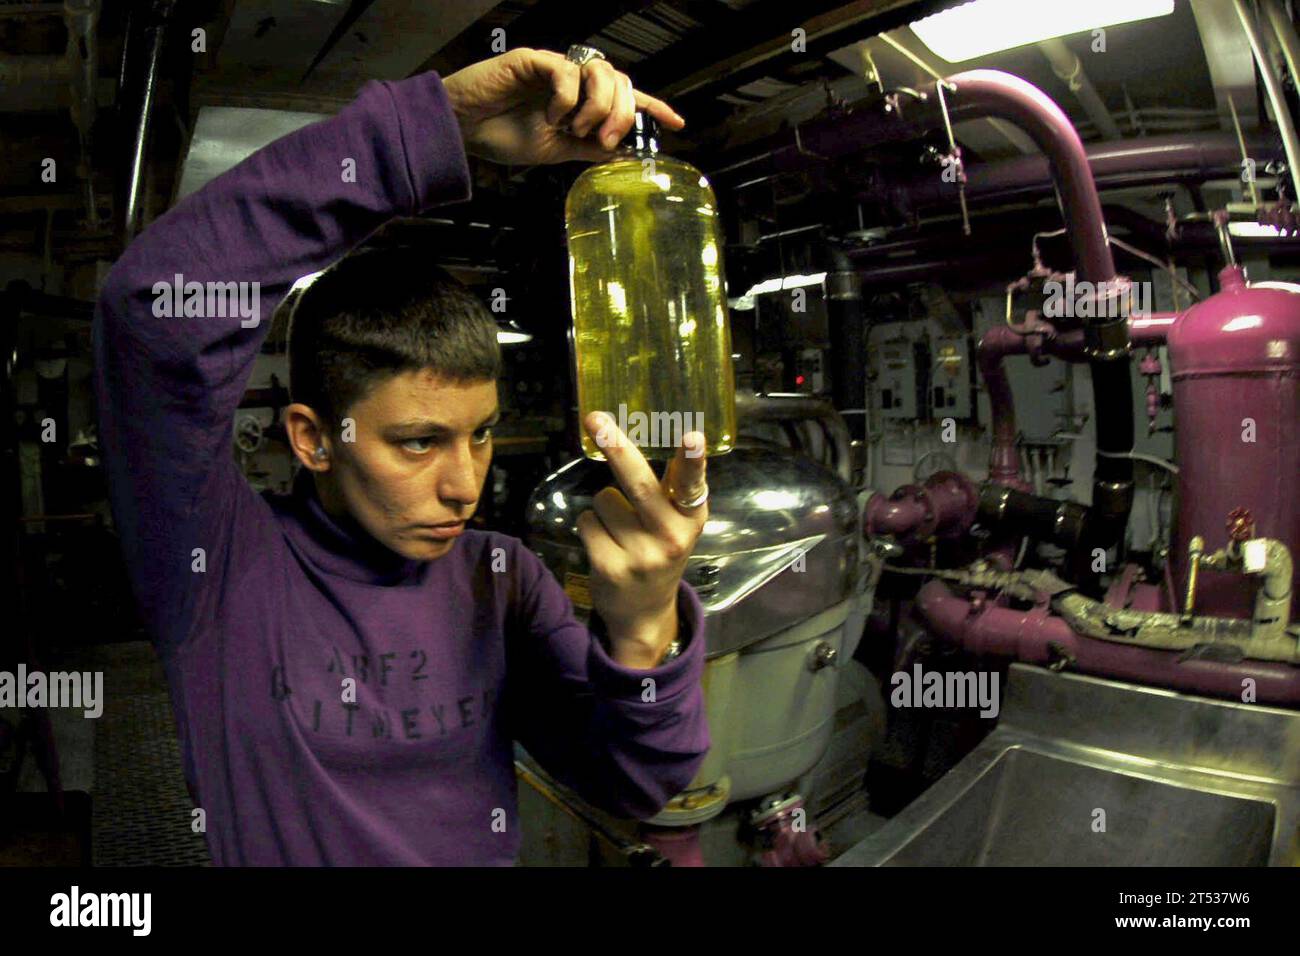 below decks, fuel, inspect, interior, purple shirt Stock Photo